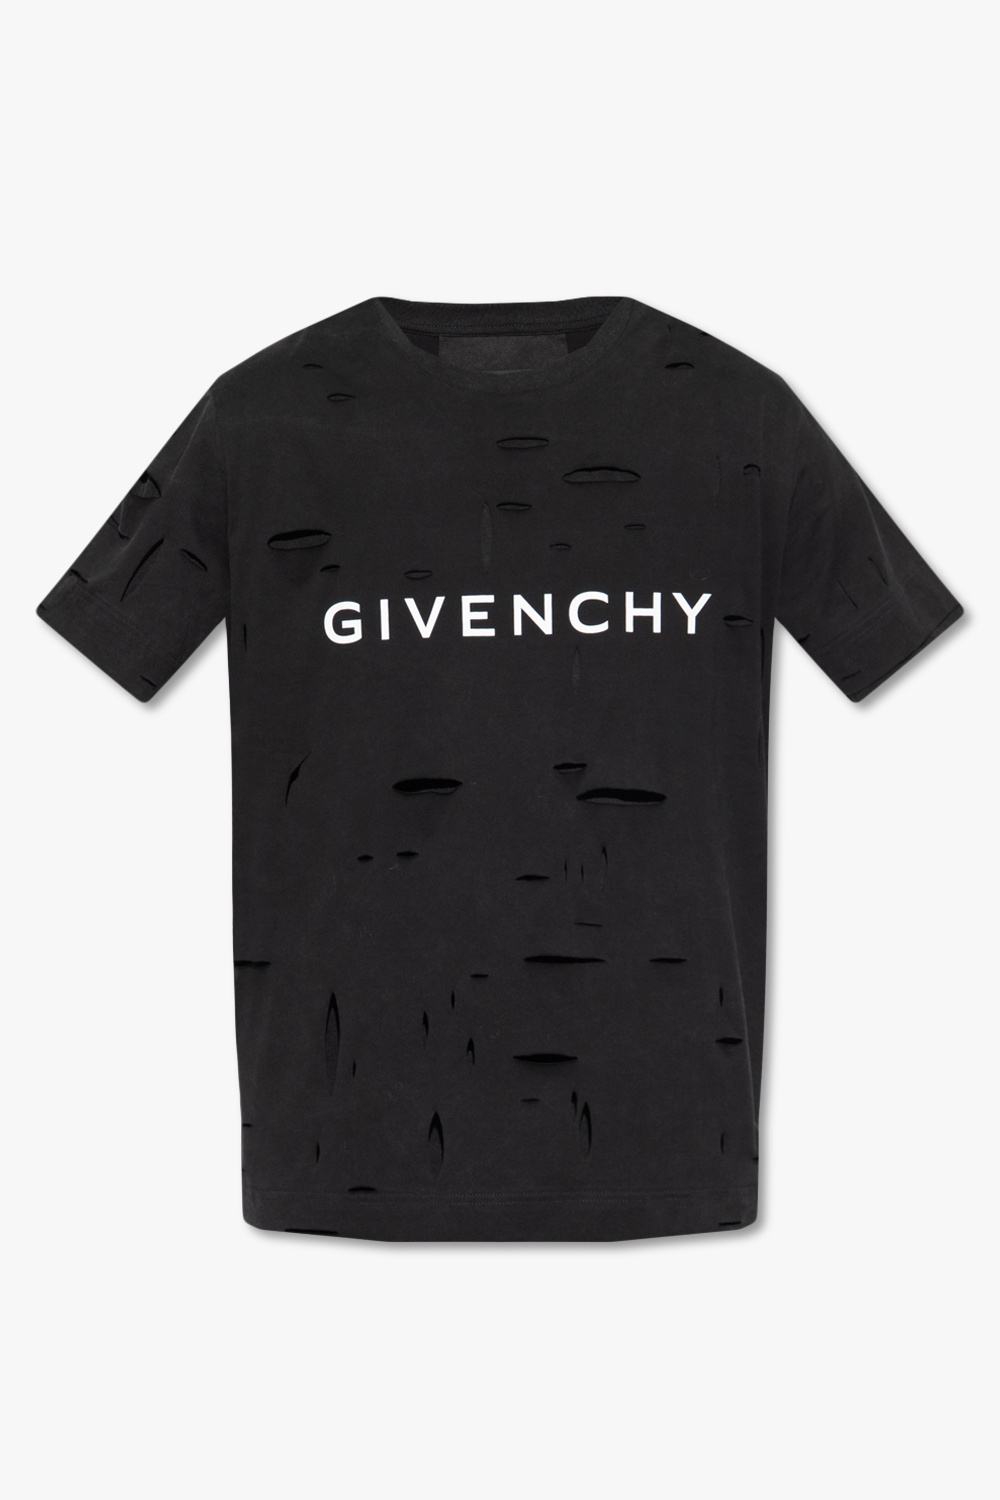 Givenchy T-shirt with logo | Men's Clothing | Vitkac